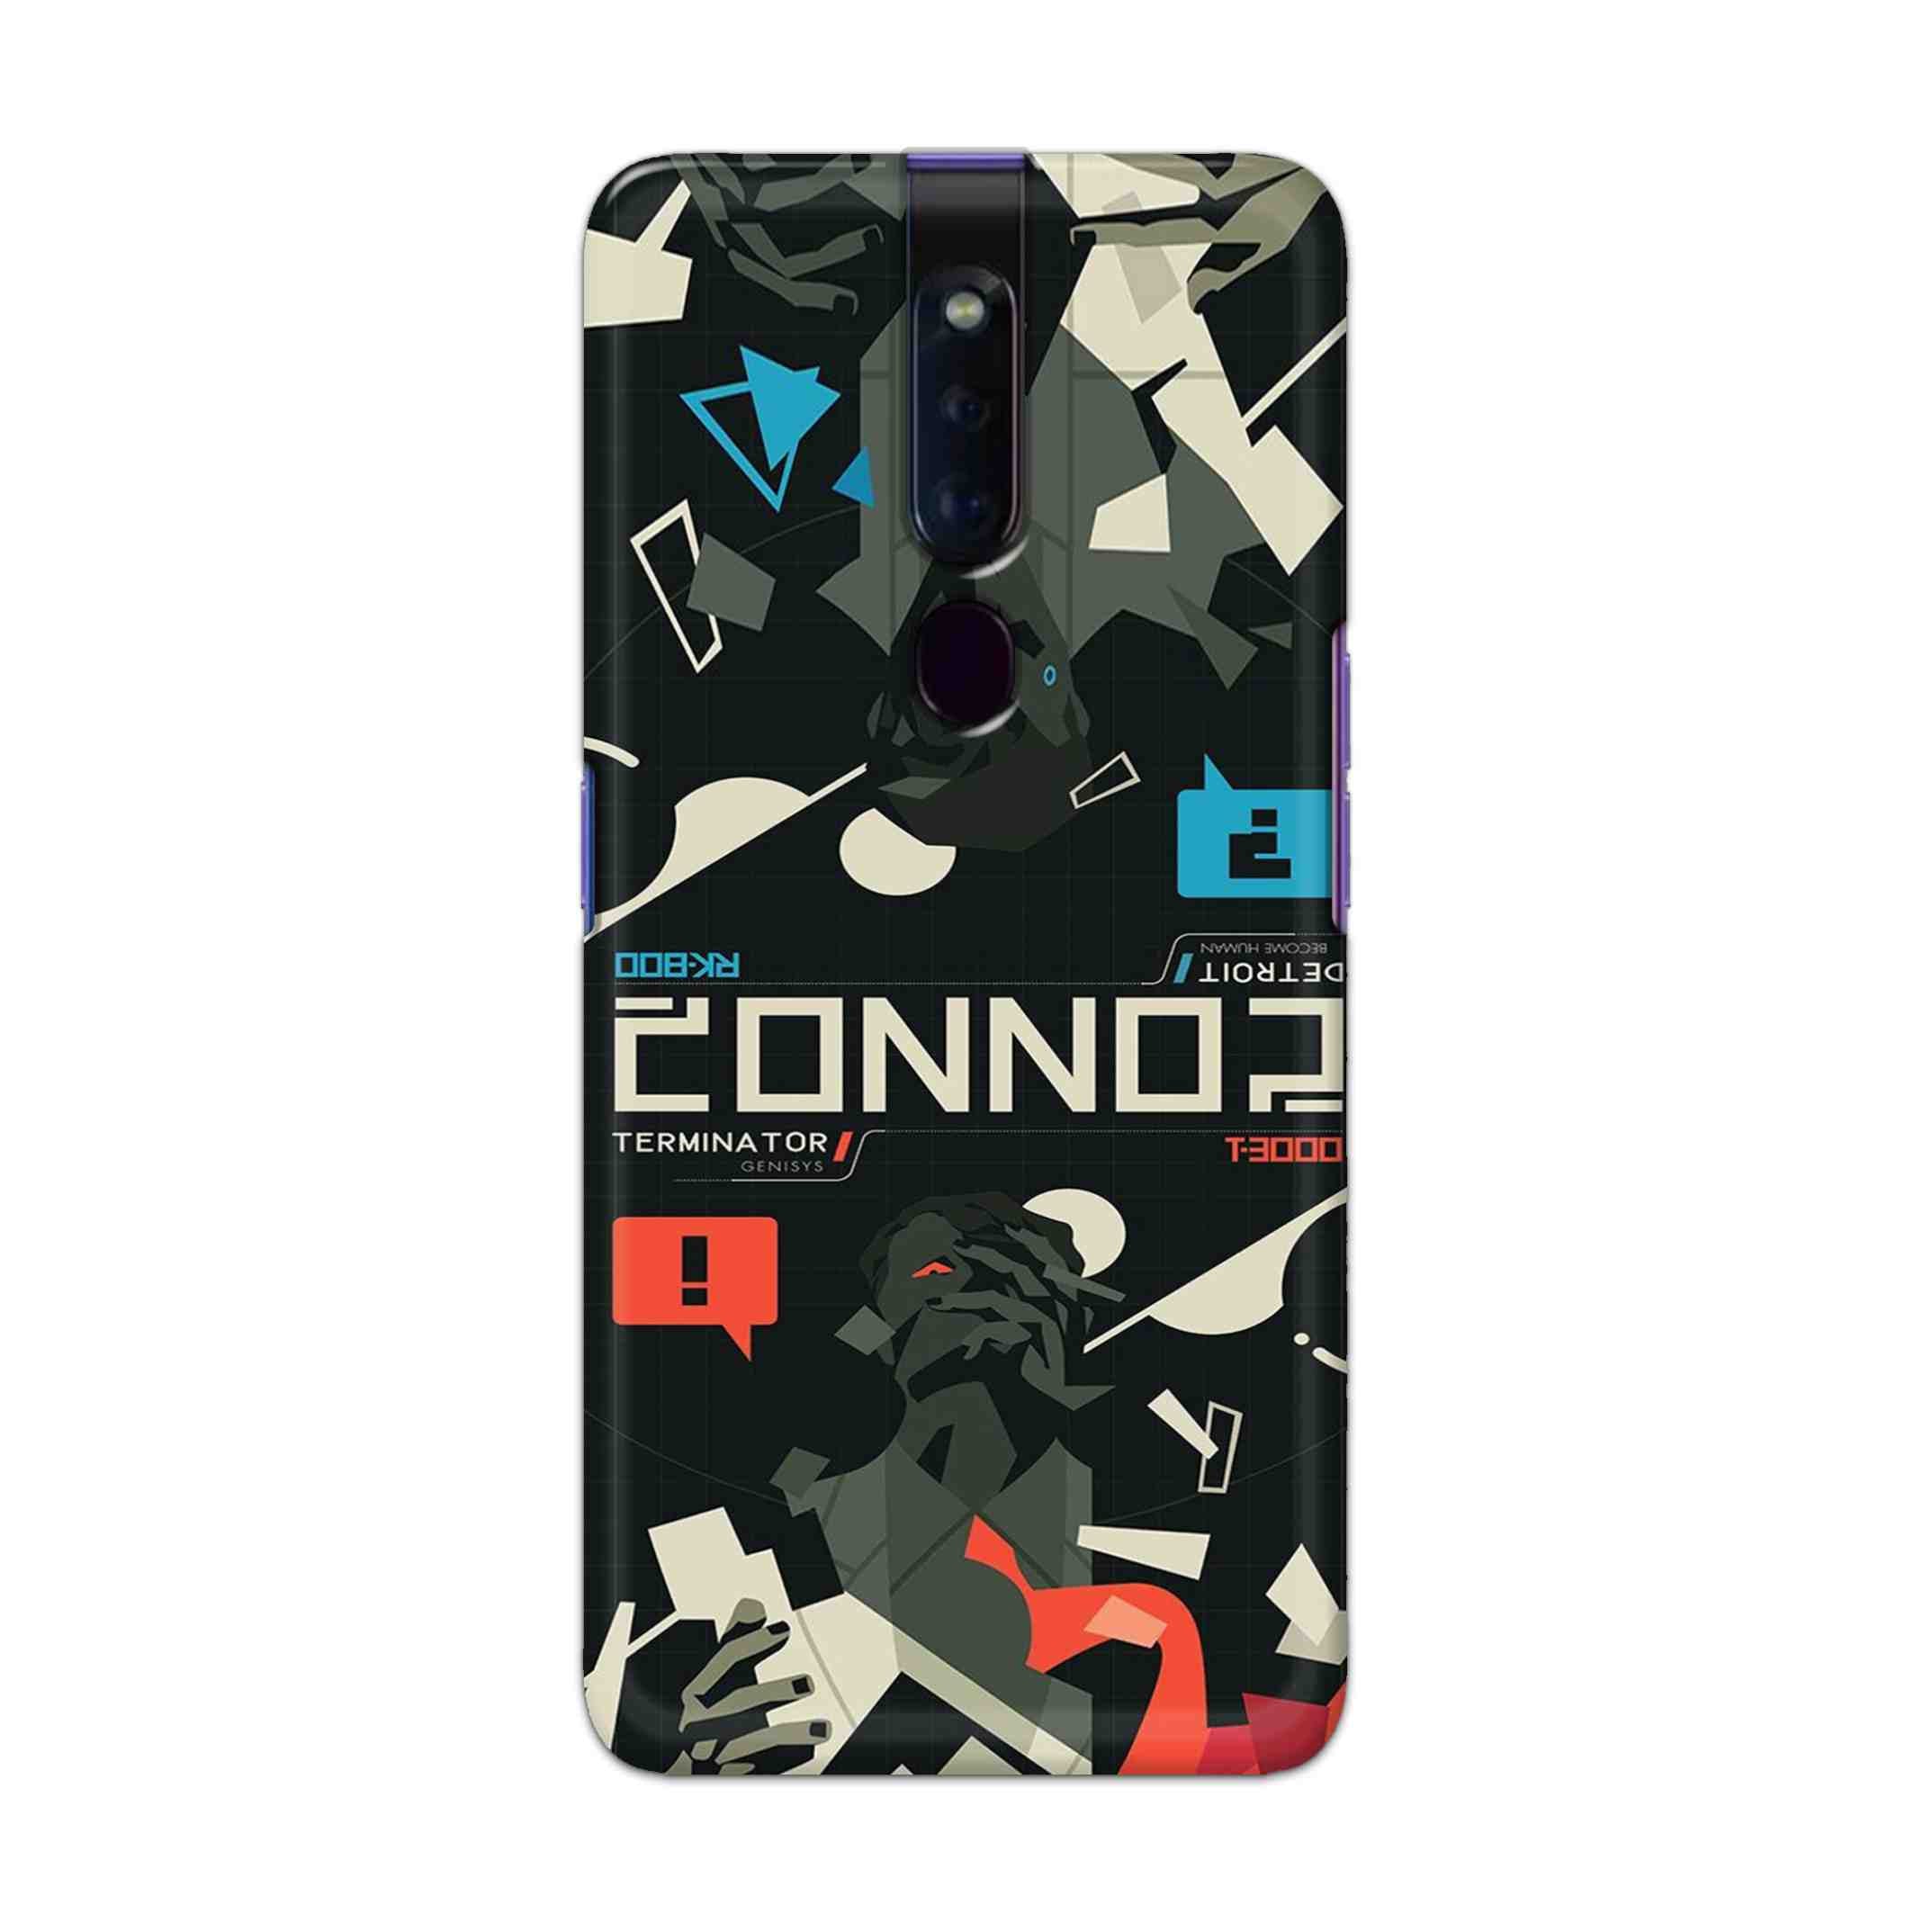 Buy Terminator Hard Back Mobile Phone Case Cover For Oppo F11 Pro Online